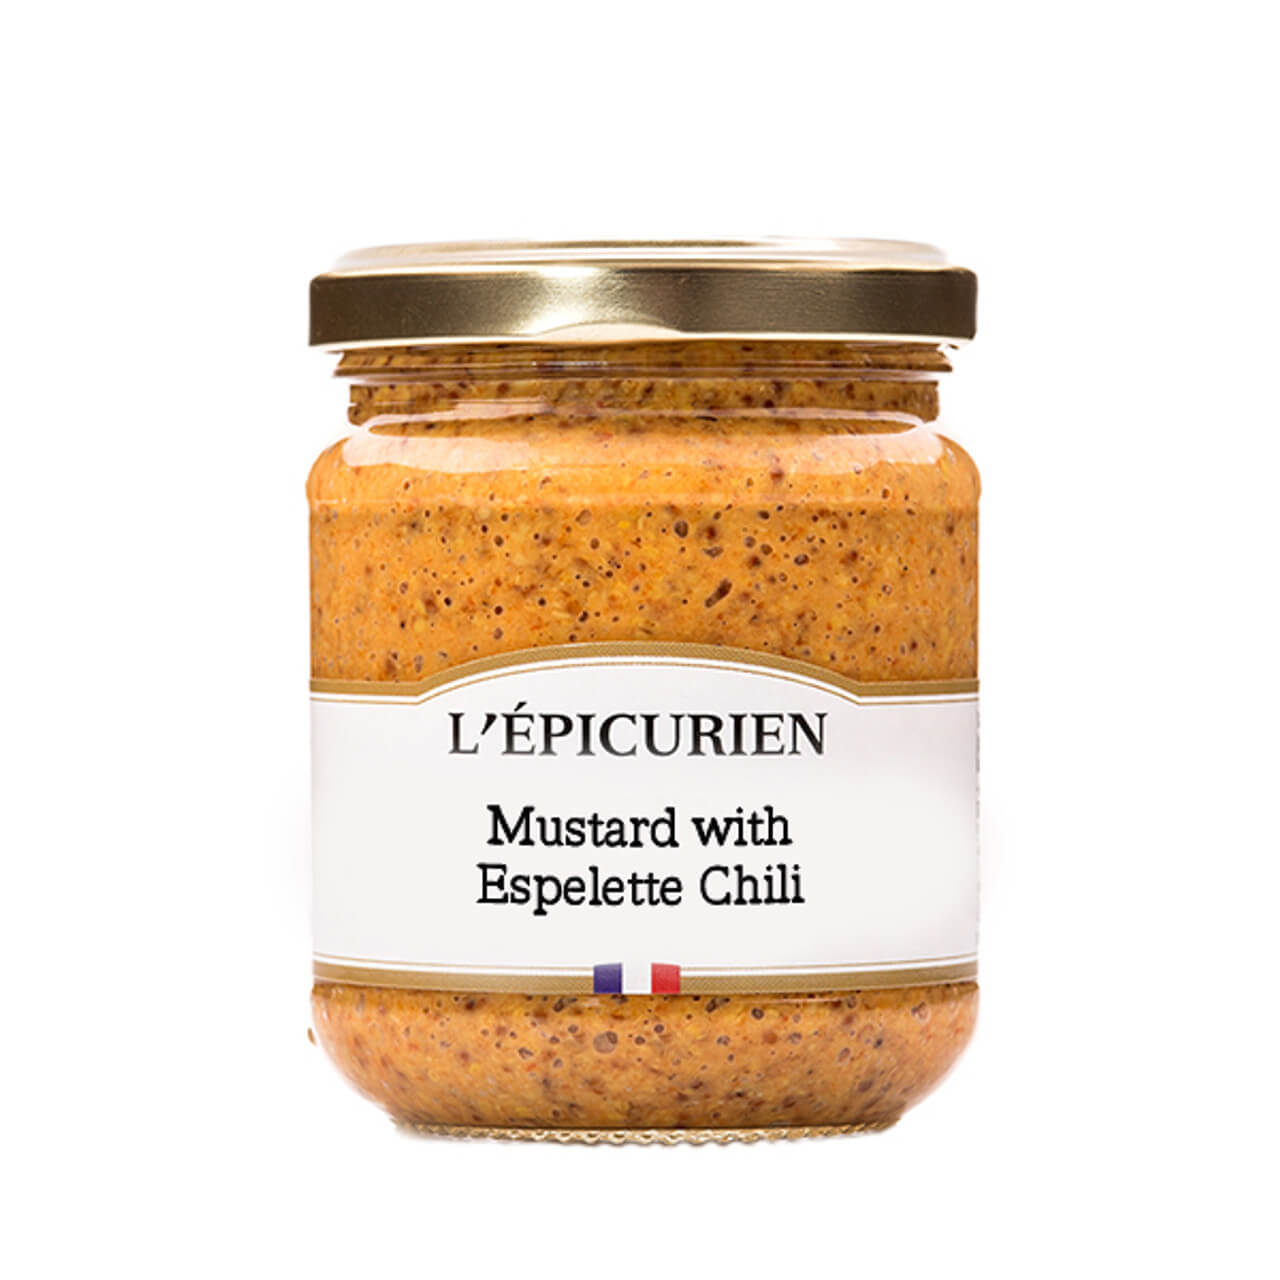 L'epicurien Espelette Chili Mustard | Sudha’s Emporium Gourmet, Gifts & Décor | Corning, NY